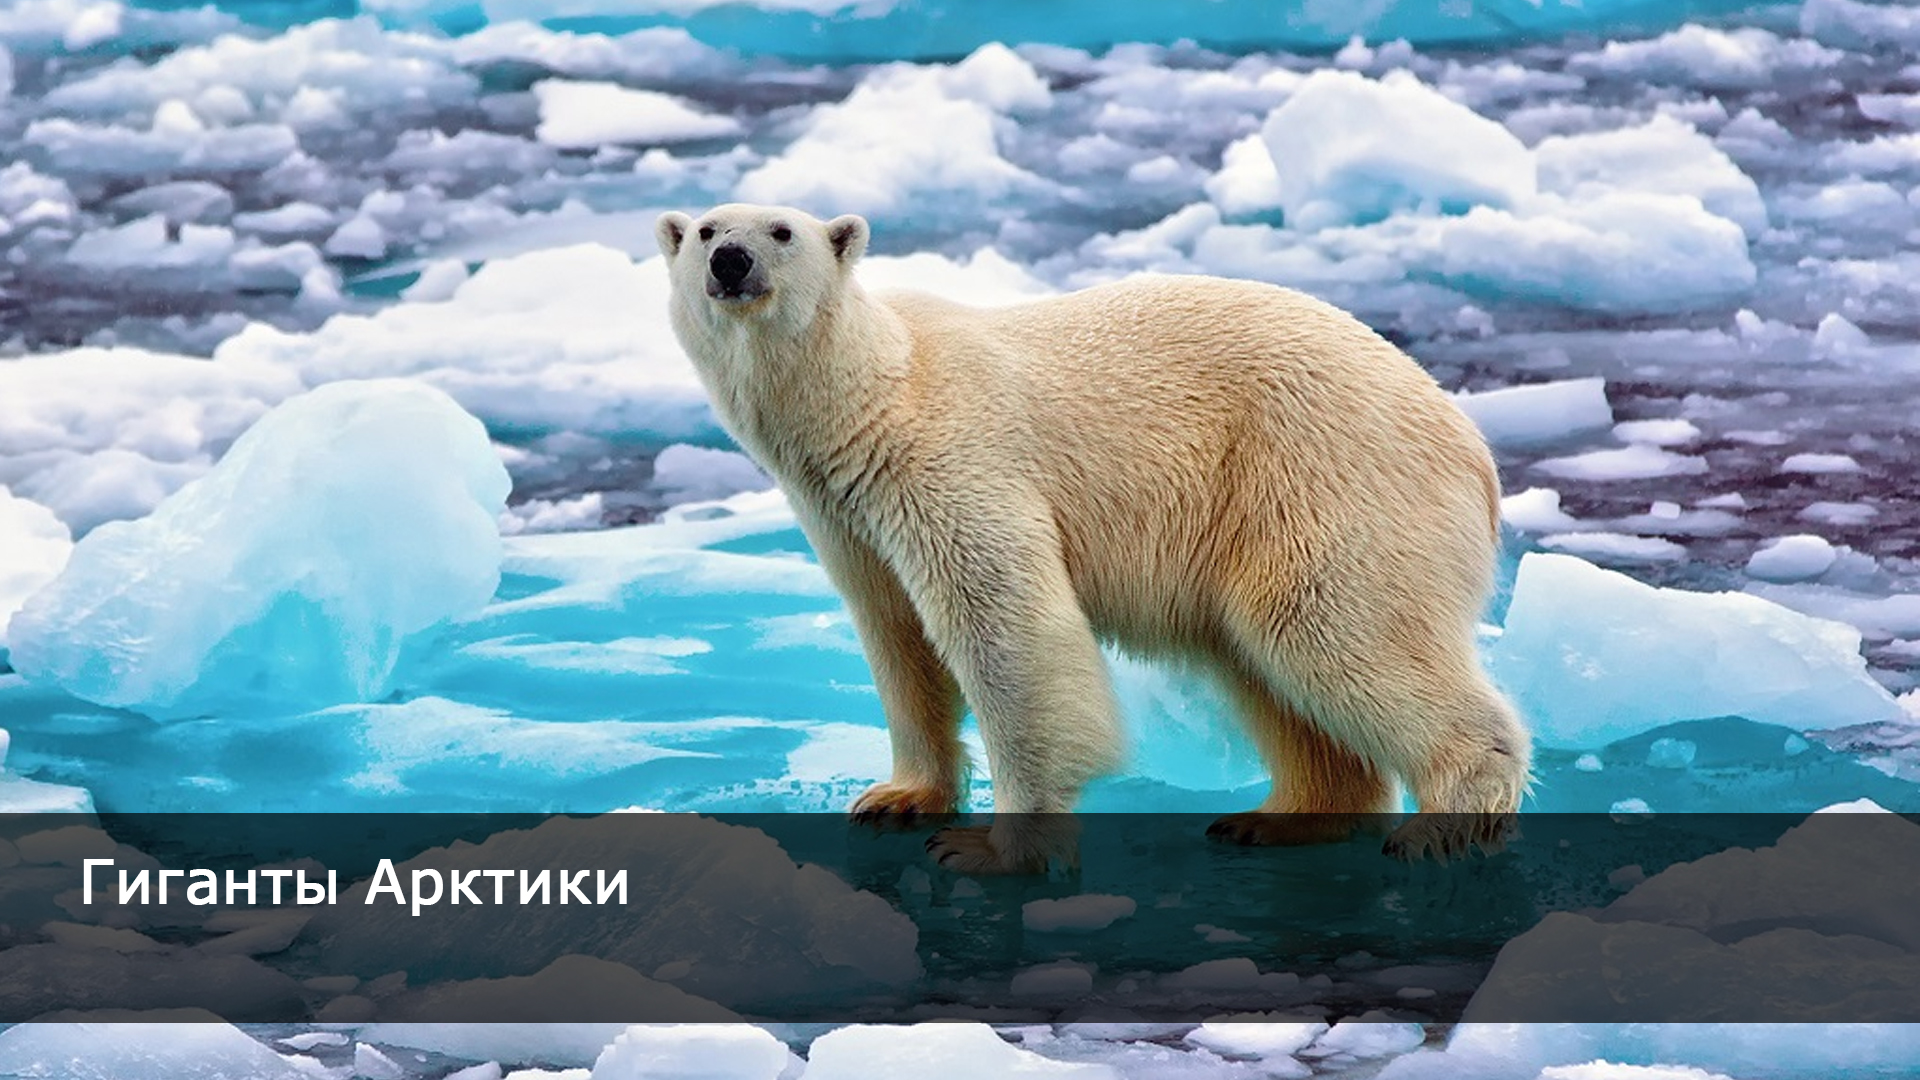 национальный парк русская арктика архангельск